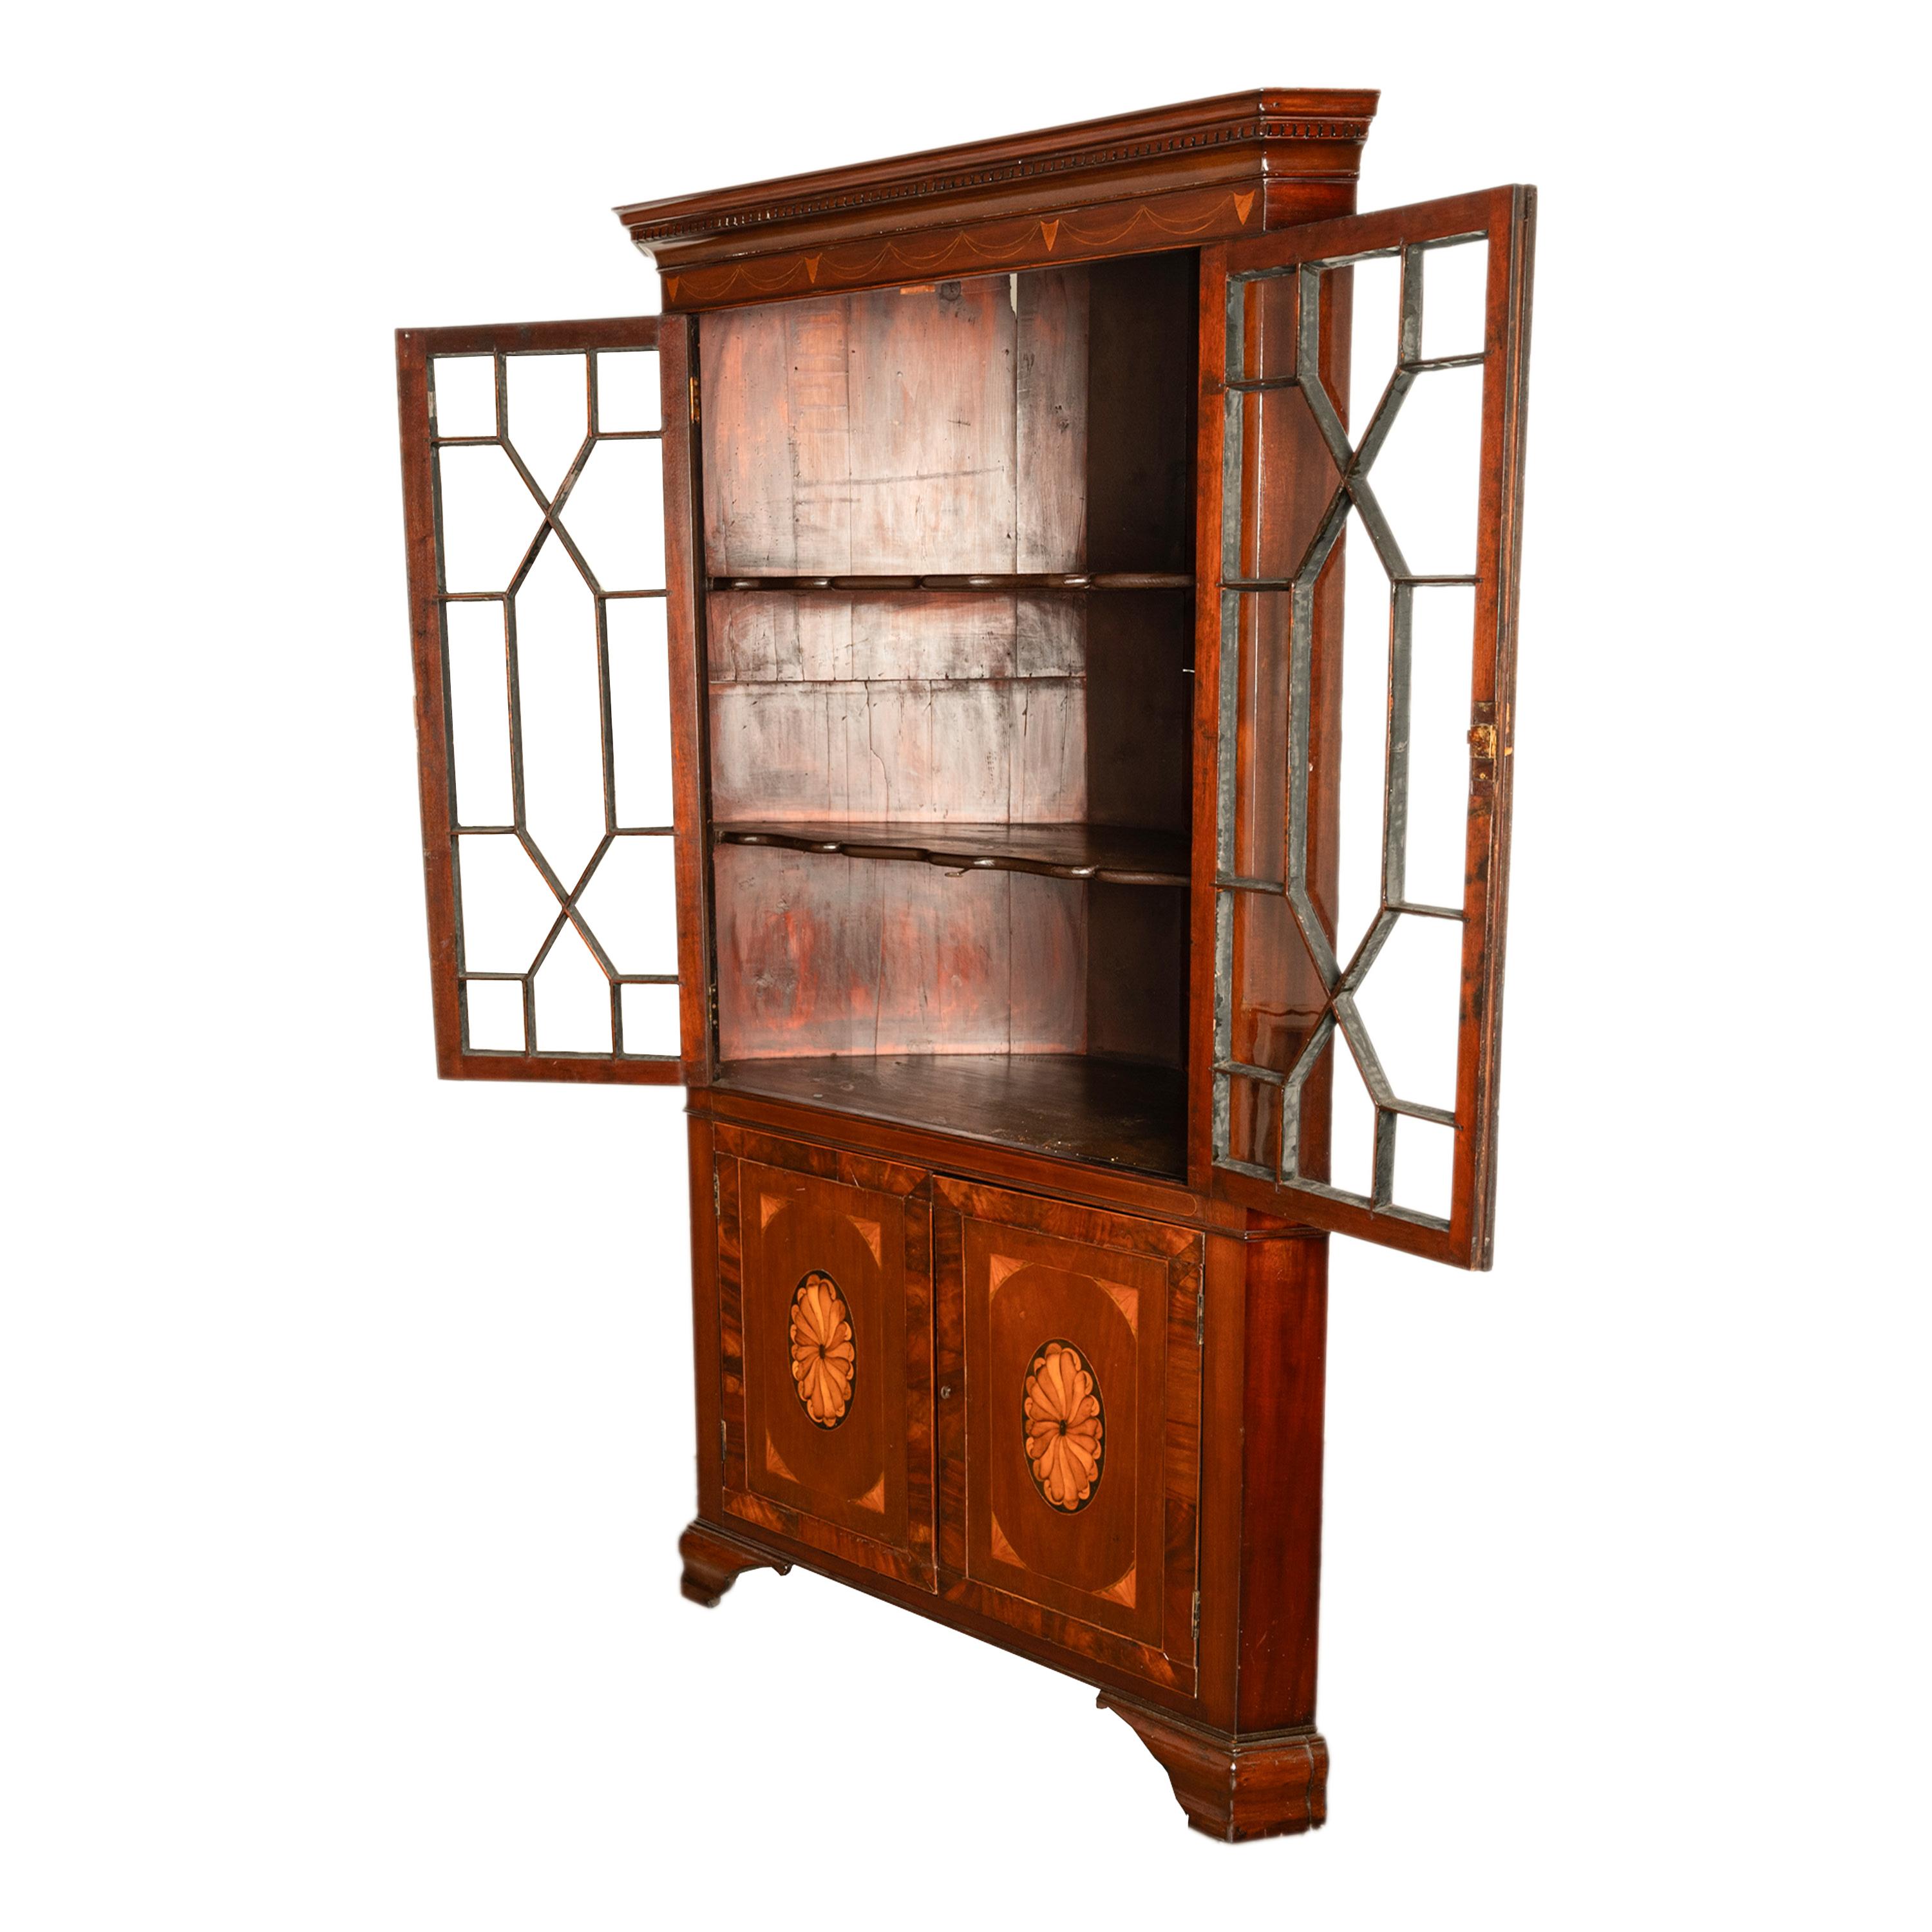 English Antique 18th Century Georgian Inlaid Mahogany Freestanding Corner Cabinet 1790 For Sale